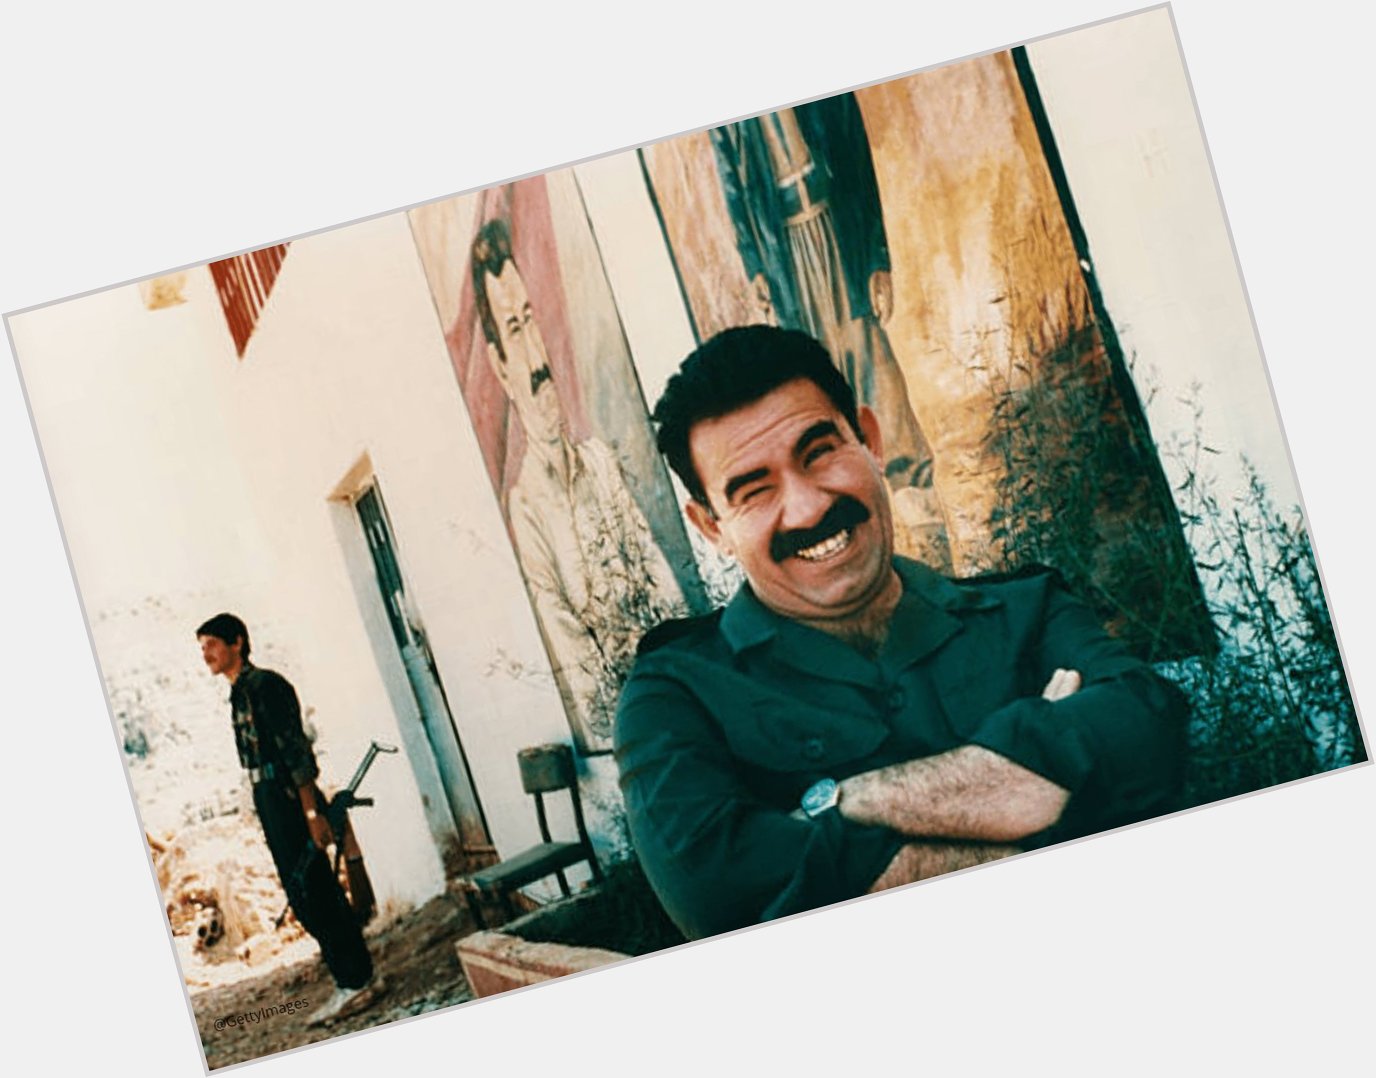 Happy Birthday Abdullah Ocalan
Rojbuna Te piroz be  